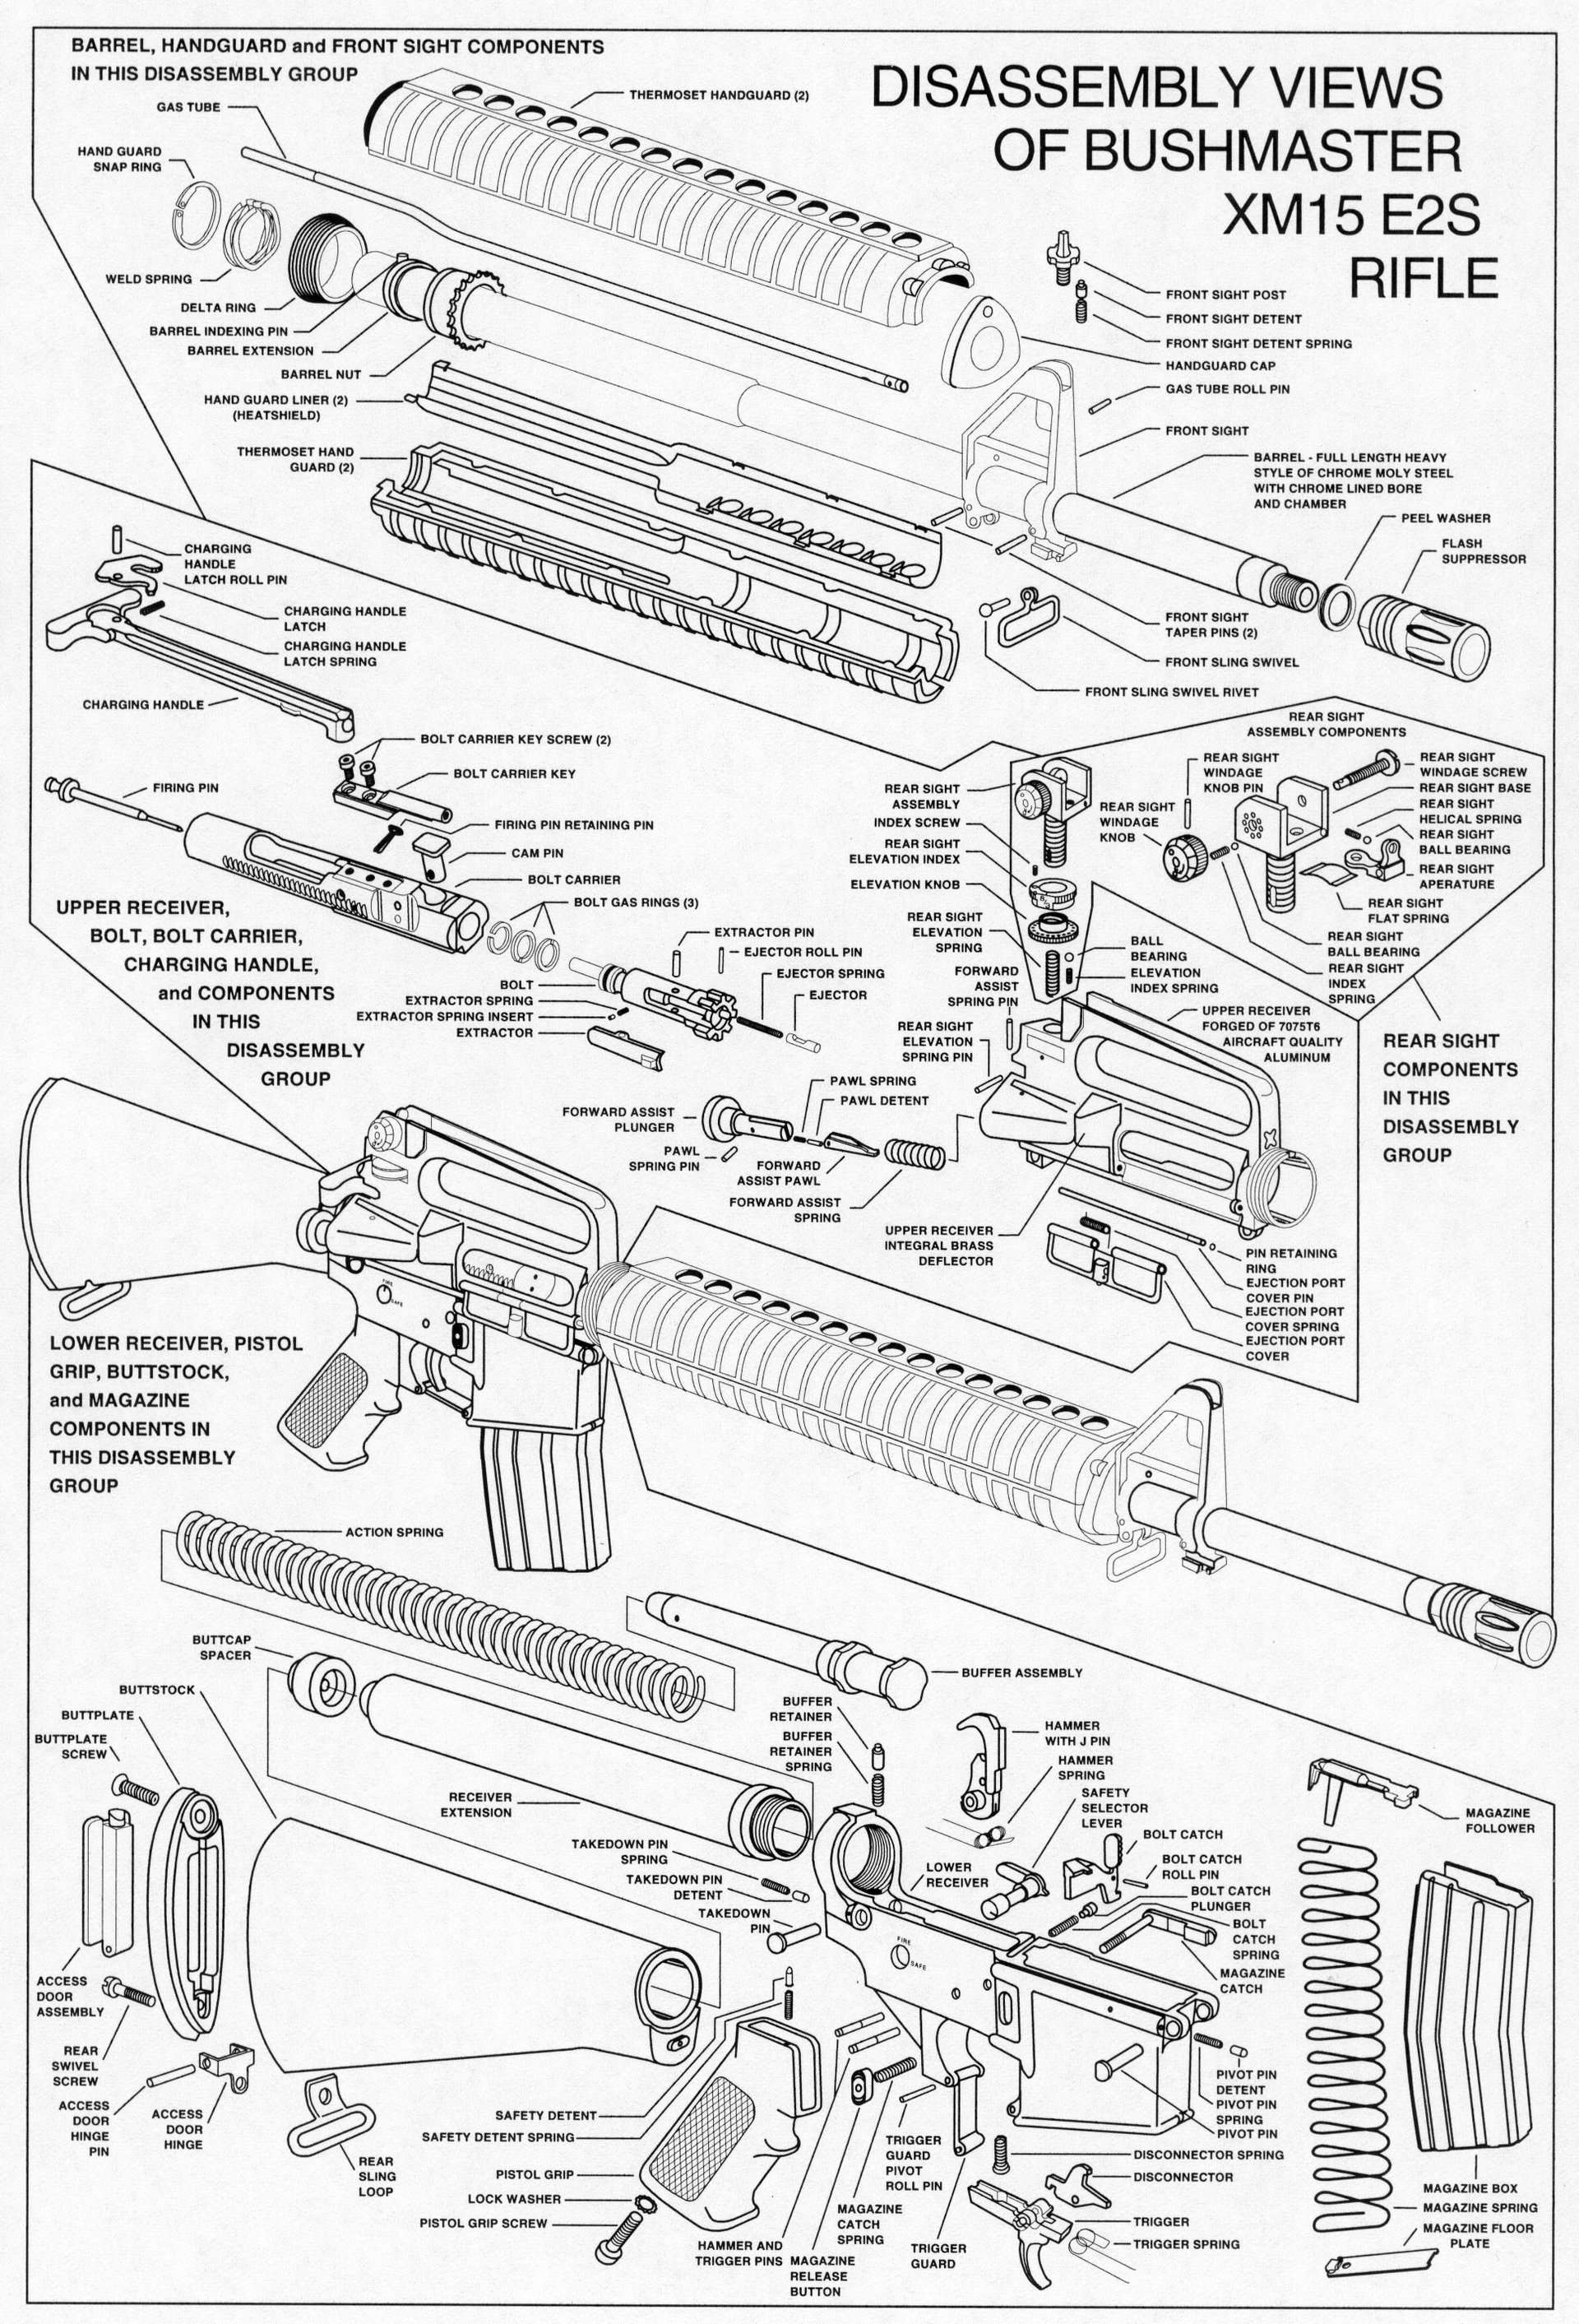 Bushmaster Ar-15 Xm15-E2s Manual